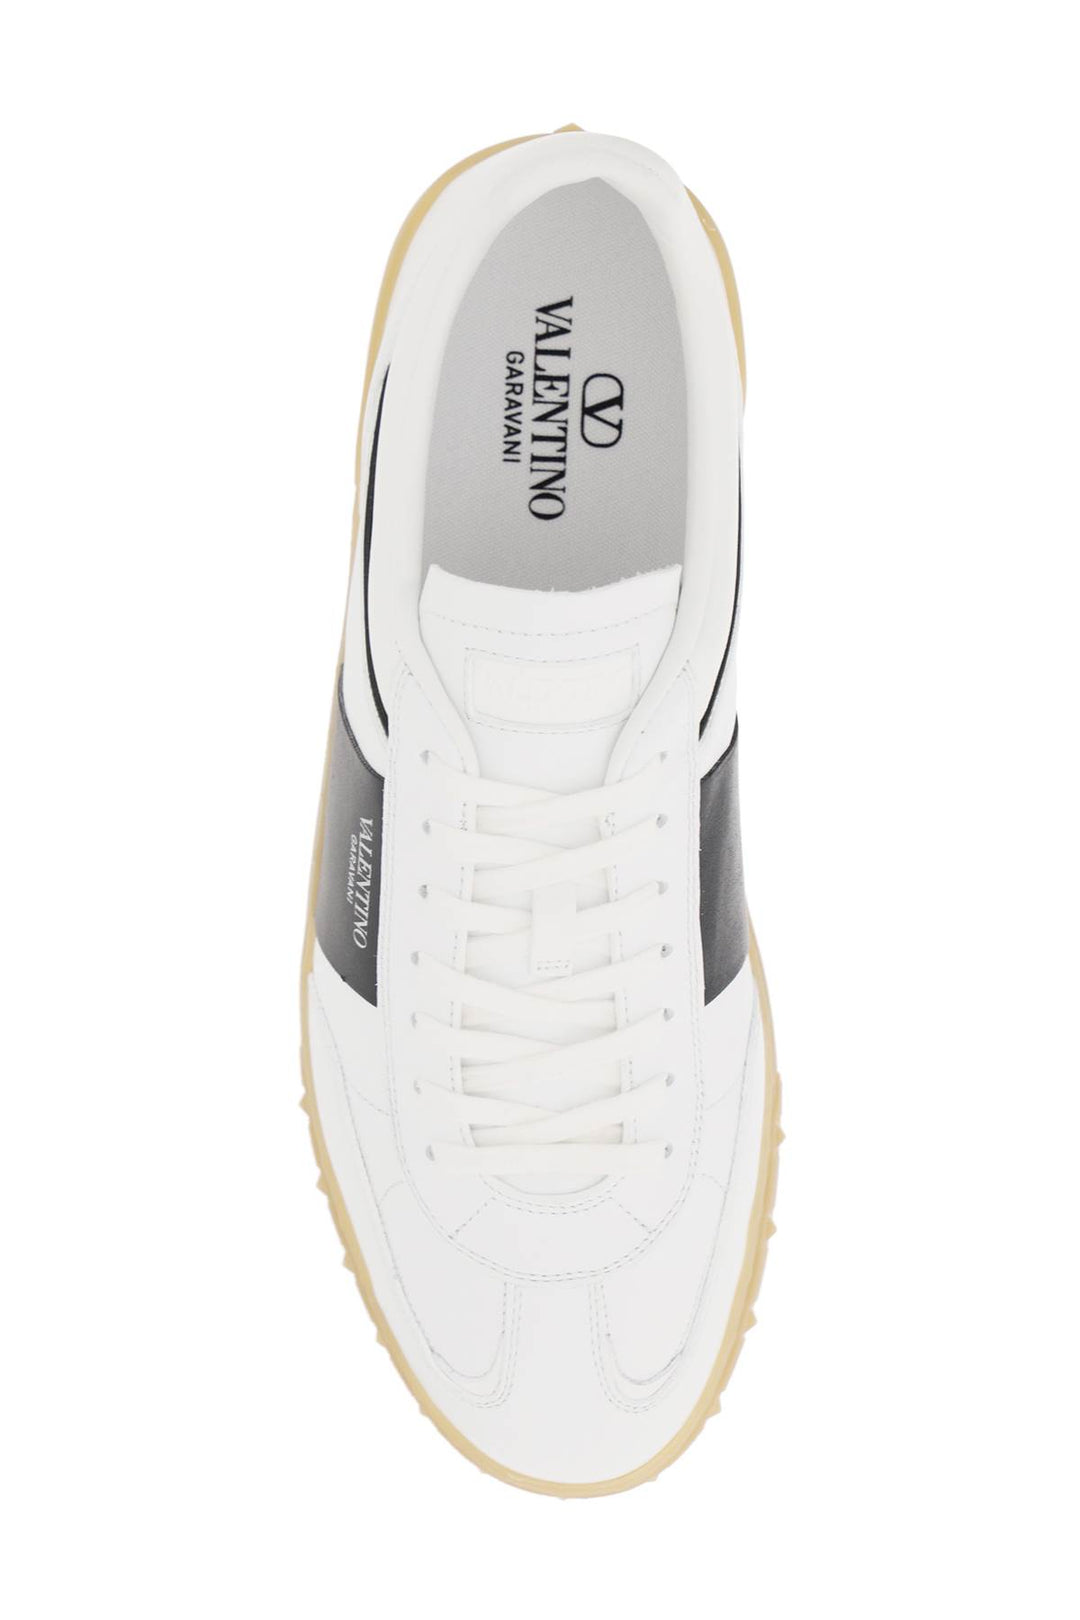 Valentino Garavani Nappa Leather Low Top Upvillage Sneakers   White